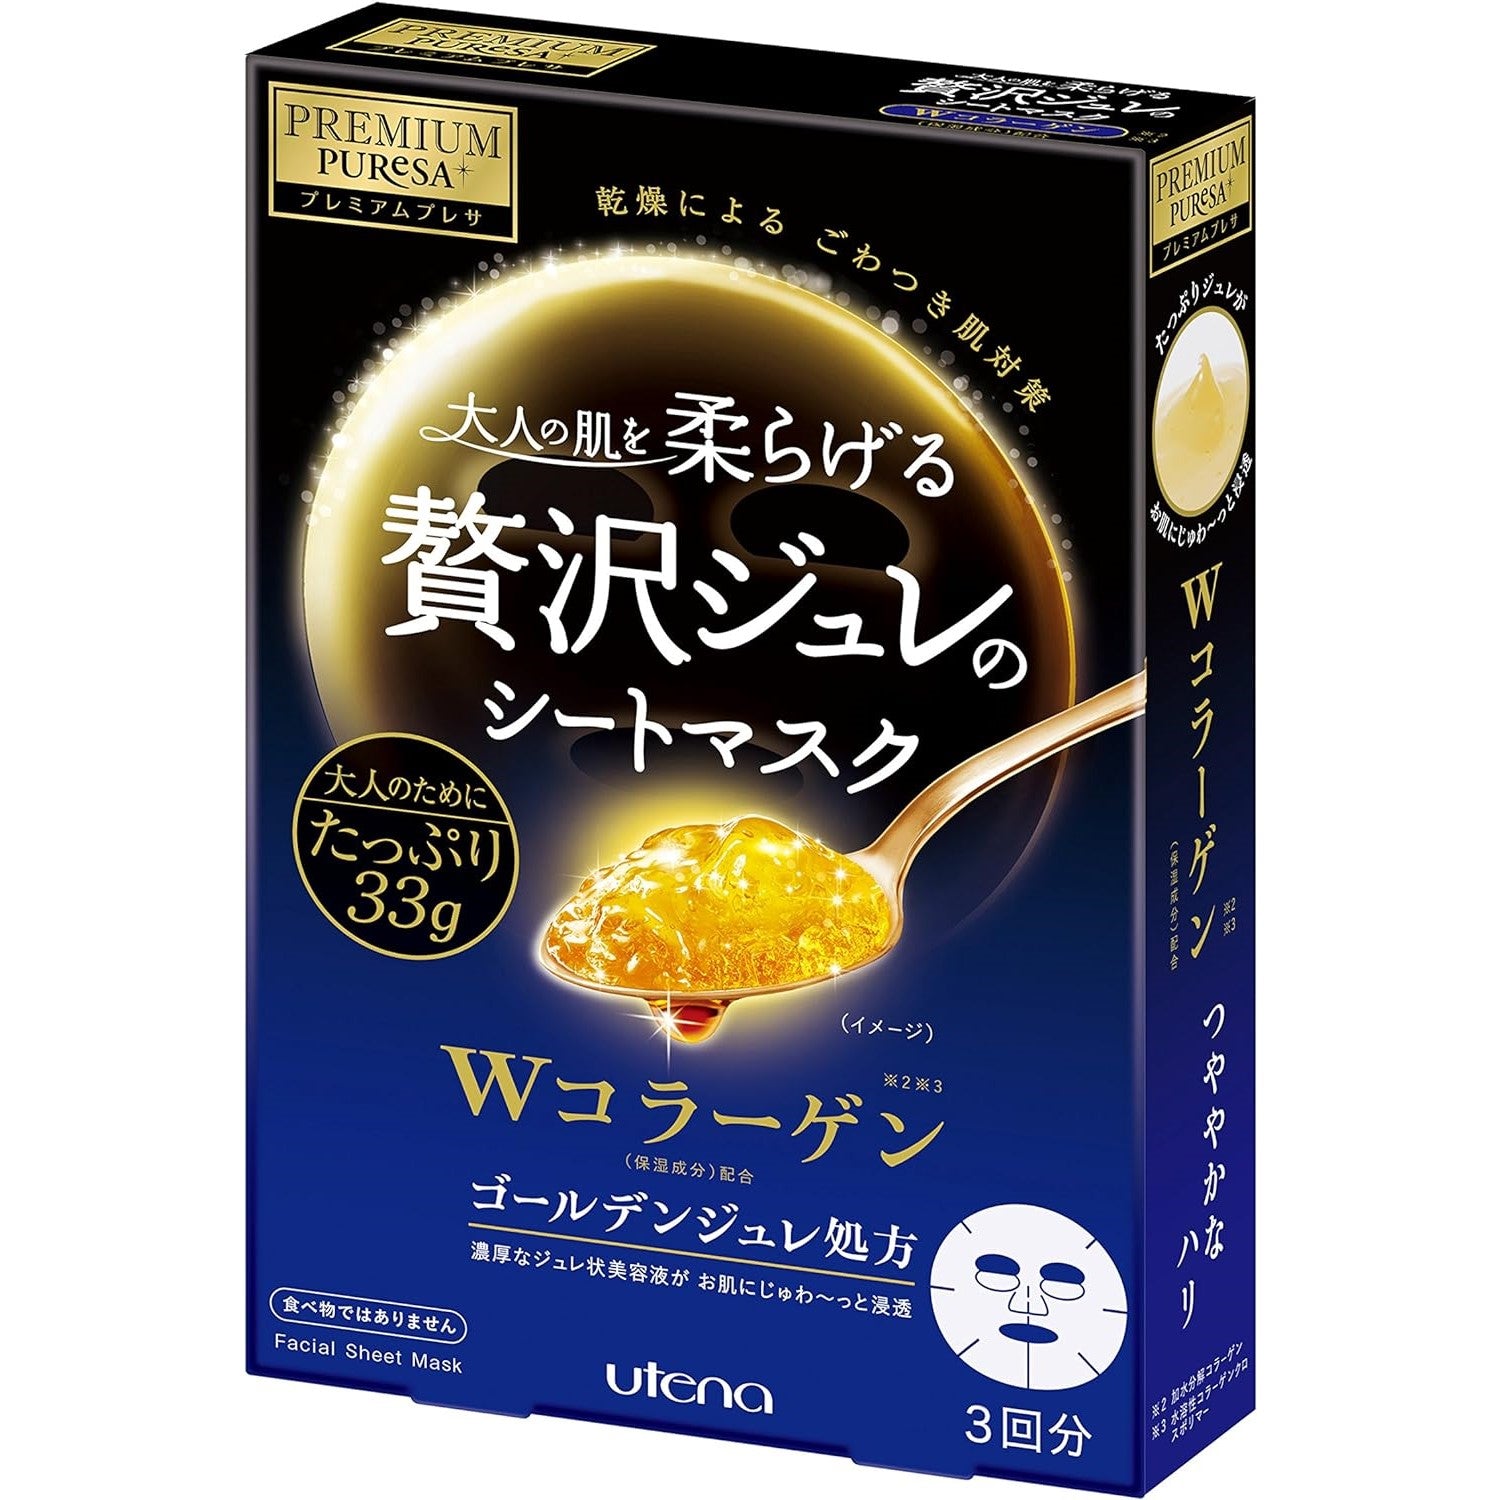 Utena Premium Puresa Golden Jelly Mask